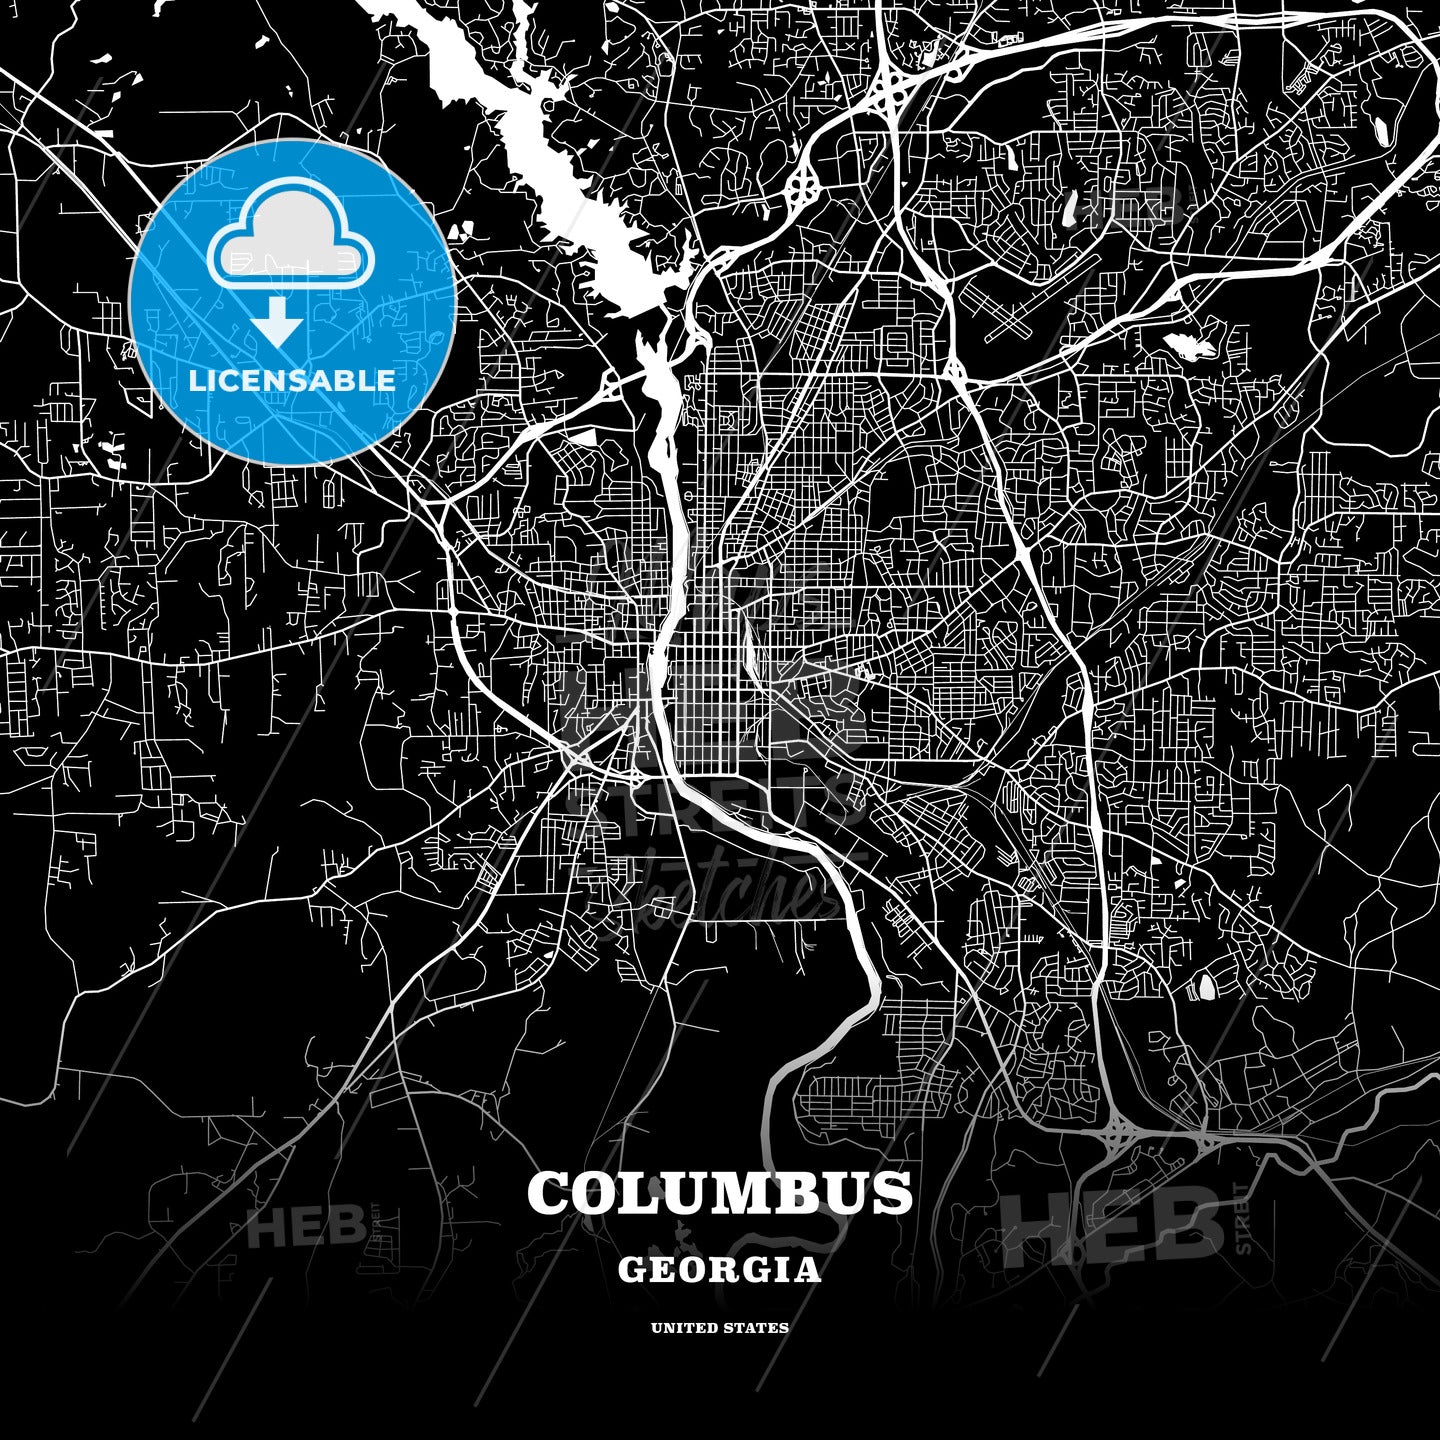 Columbus, Georgia, USA map